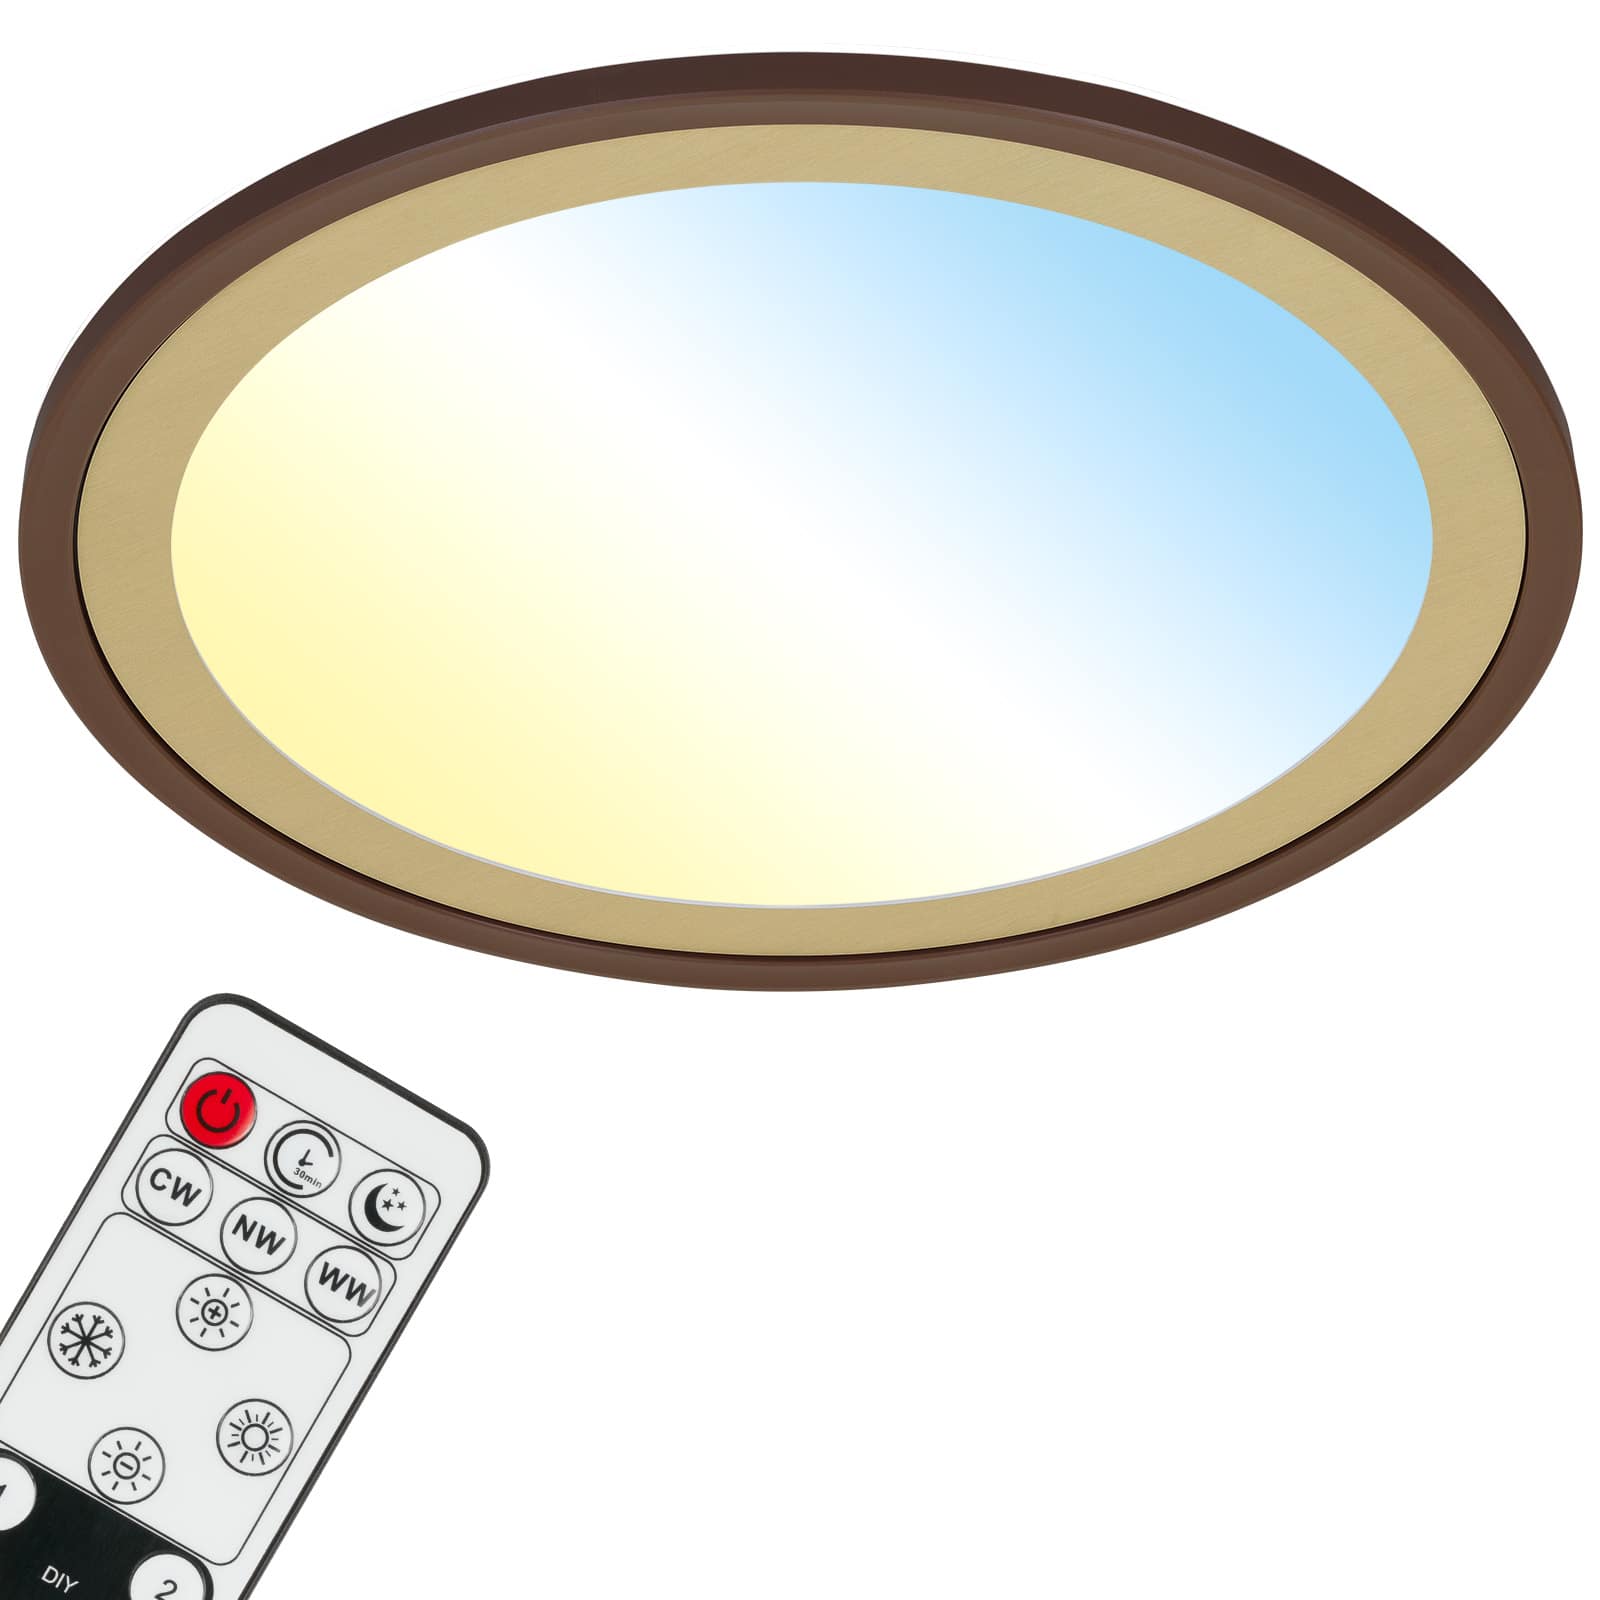 Ultraflaches CCT-LED Panel mit LED Backlight, Ø42 cm, LED, 22 W, 3000 lm, braun-gold